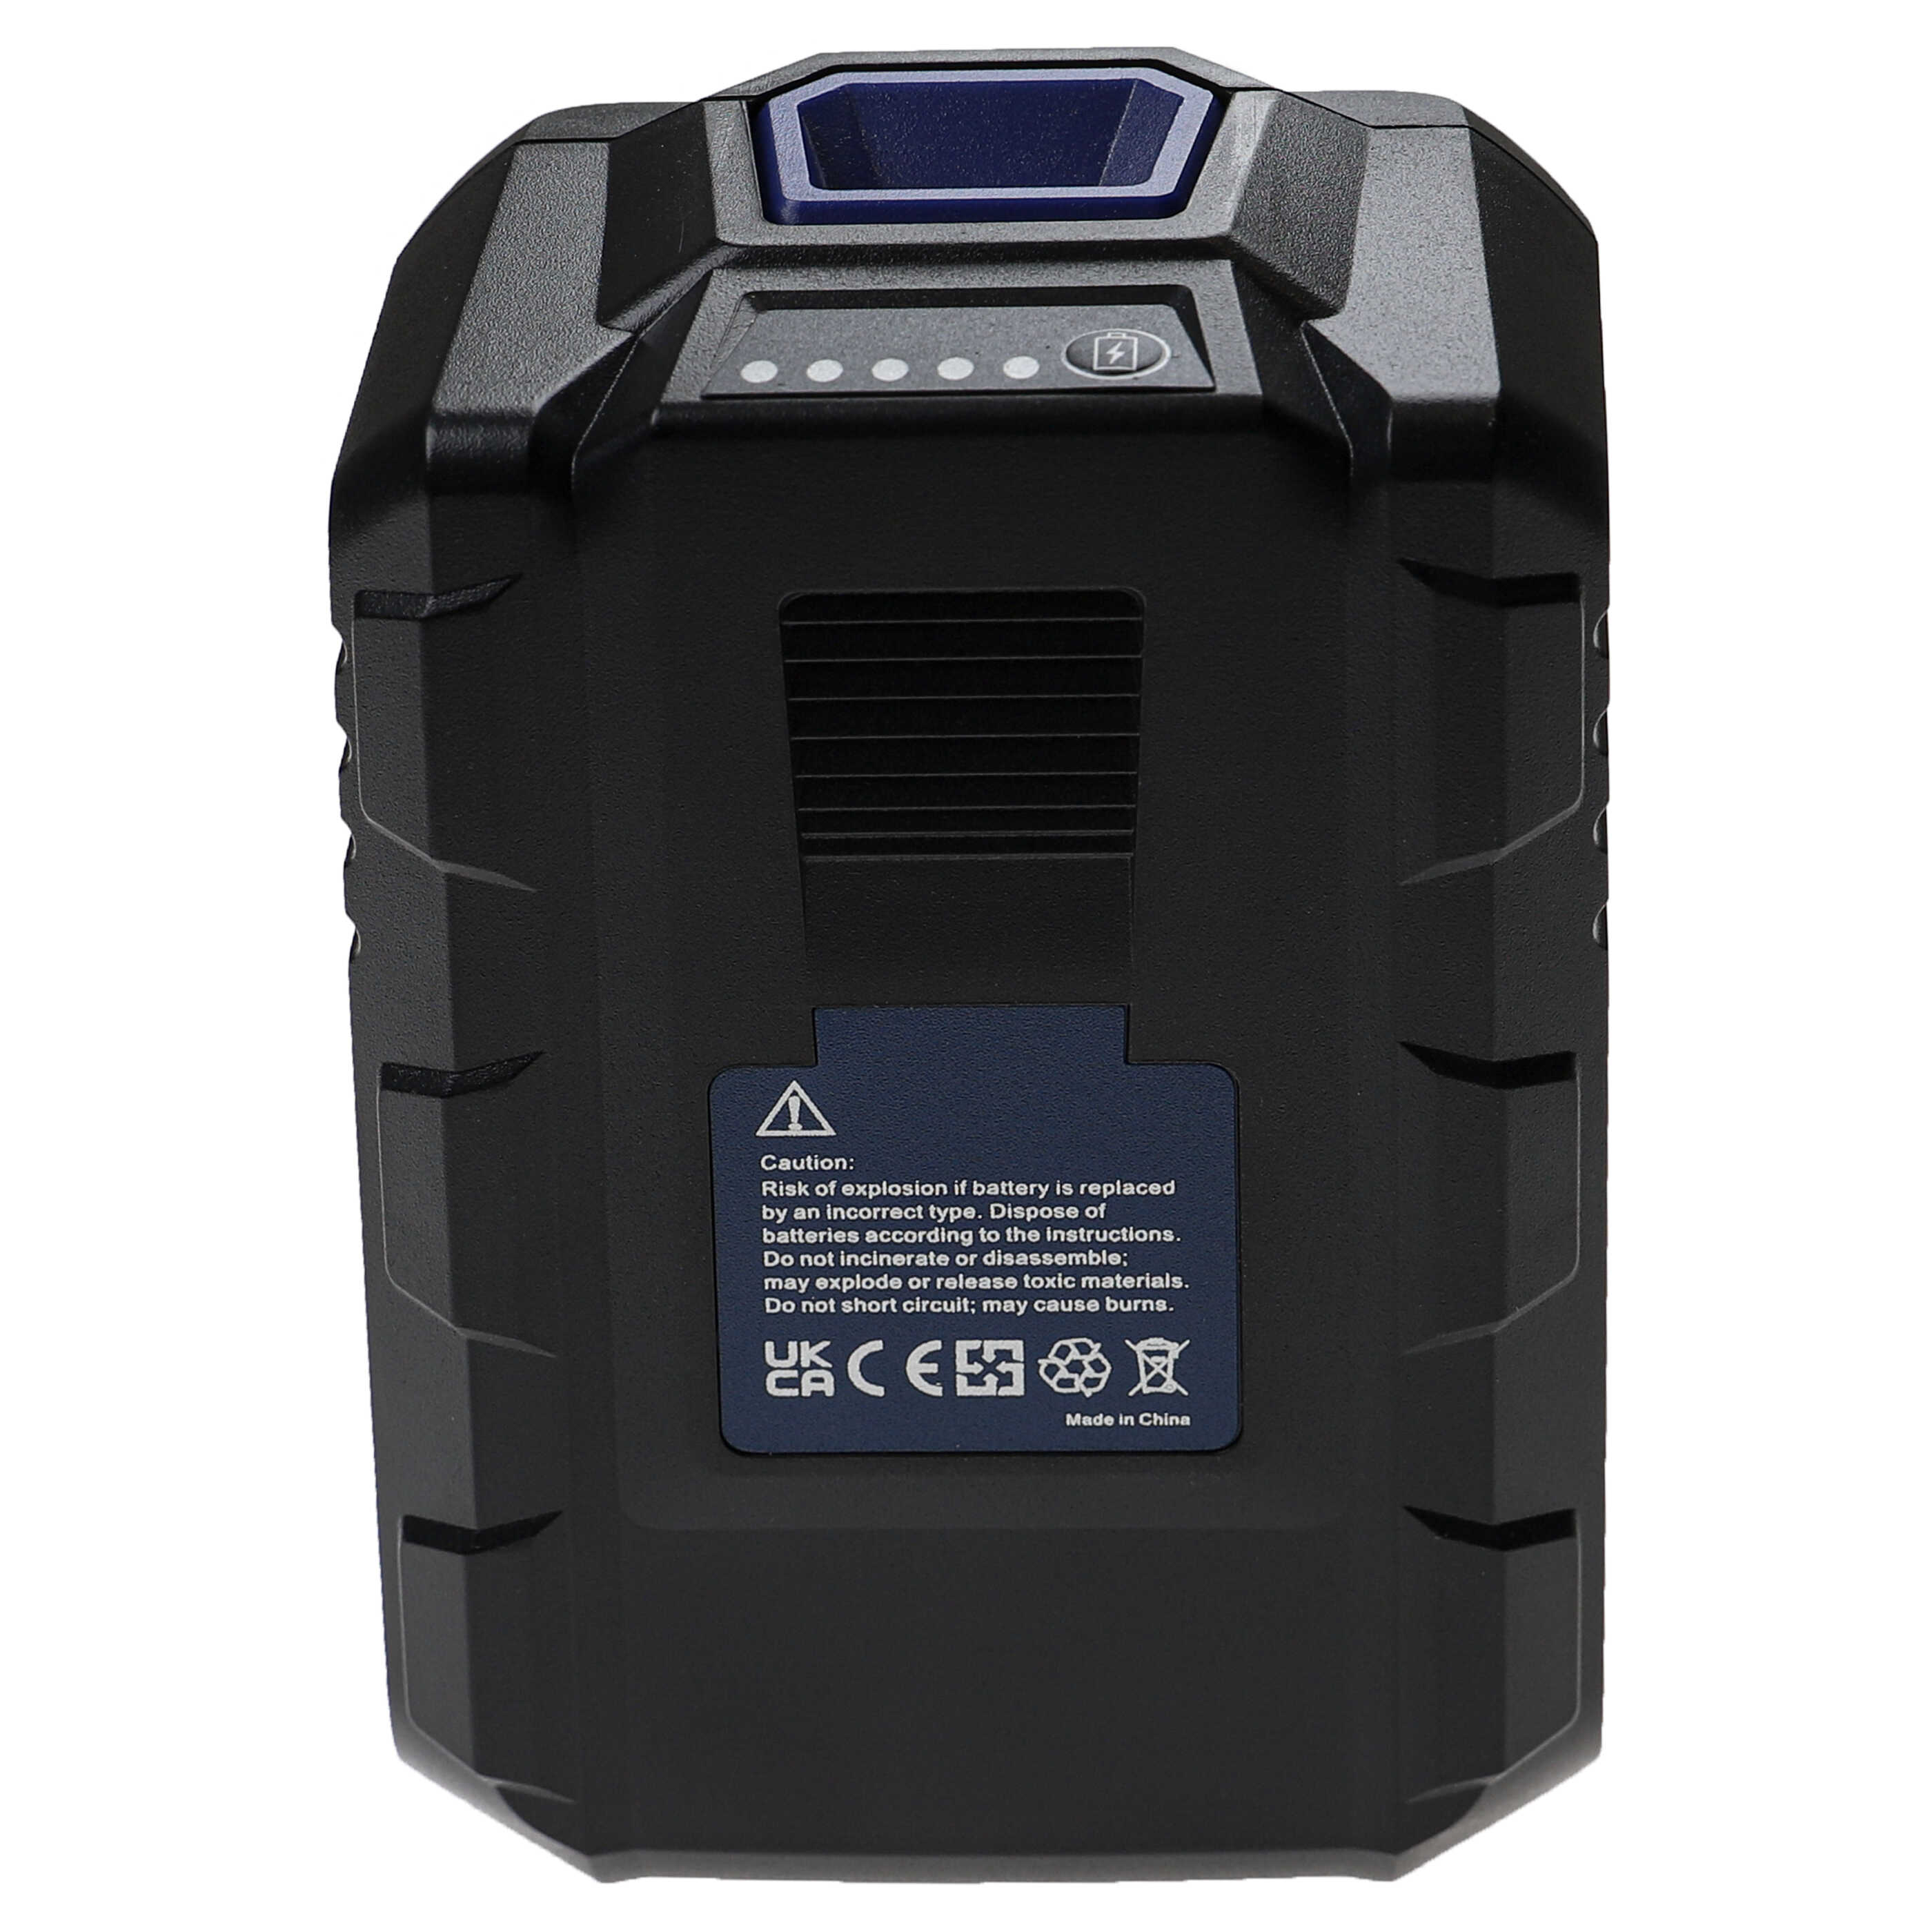 Akumulator do robota koszącego zamiennik Lux Tools 36LB2600, 1787233 - 5000 mAh 36 V Li-Ion, czarny